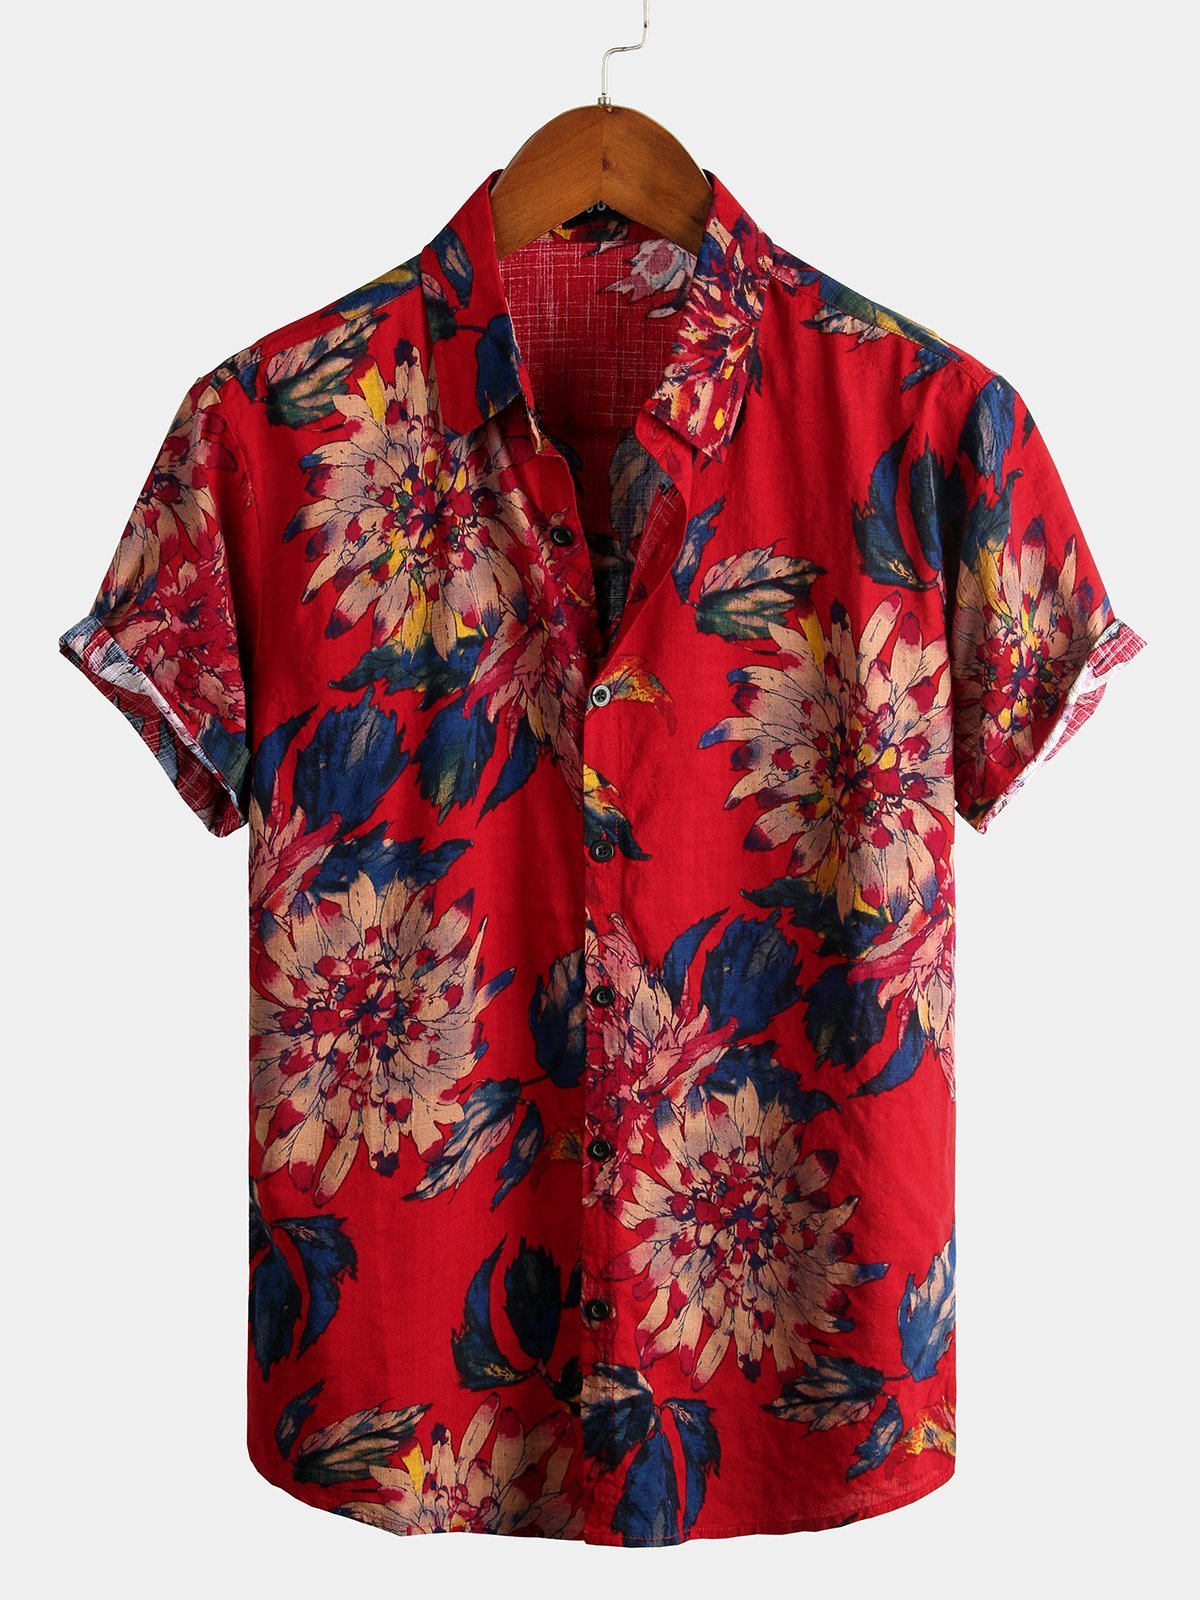 Men's Red Retro Floral Cotton Tropical Hawaiian Shirt